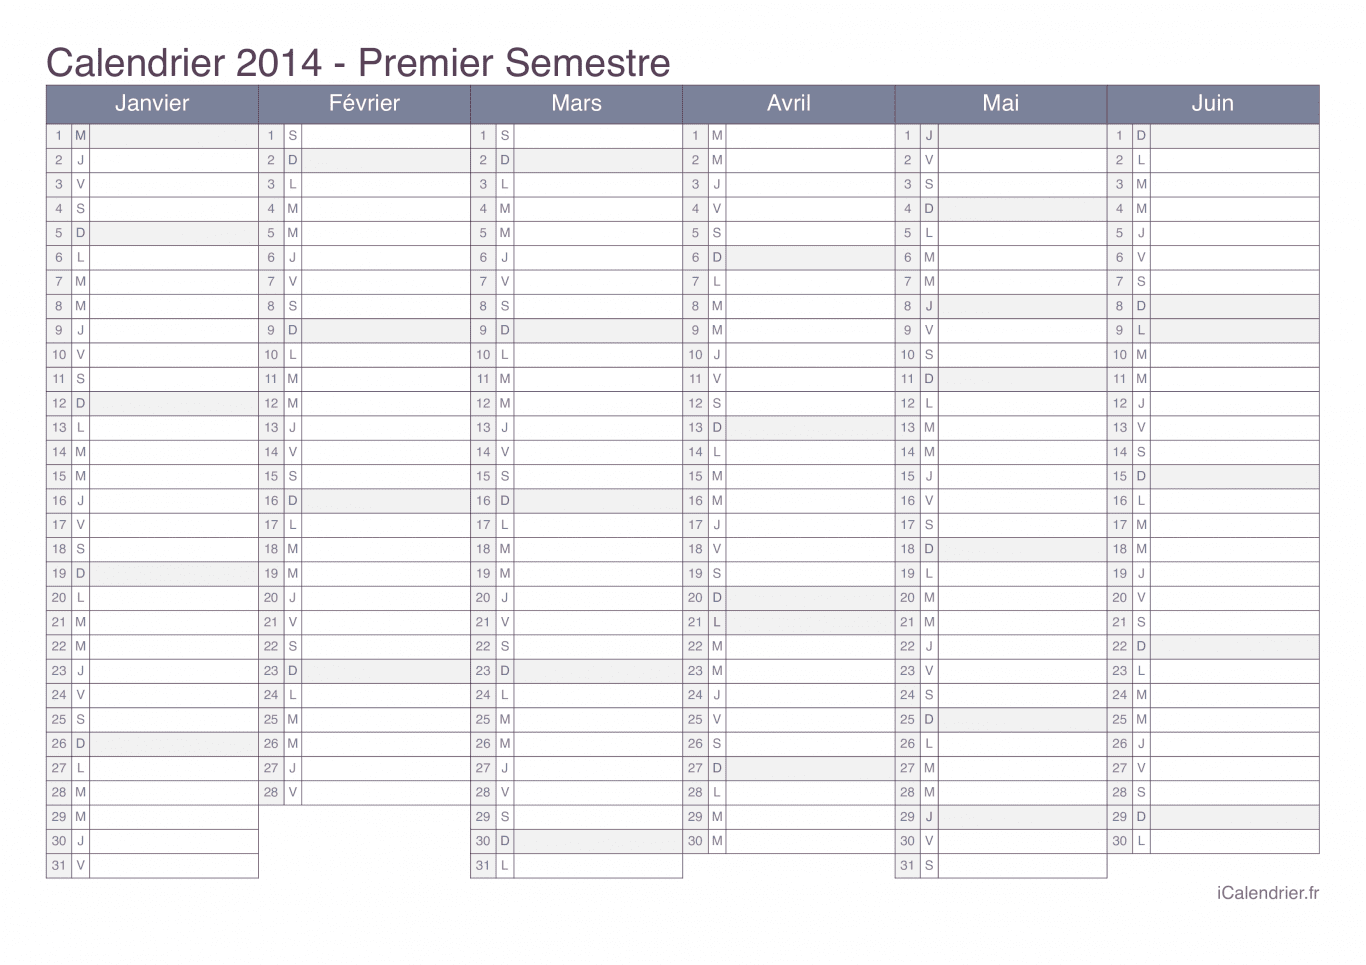 Calendrier par semestre 2014 - Office